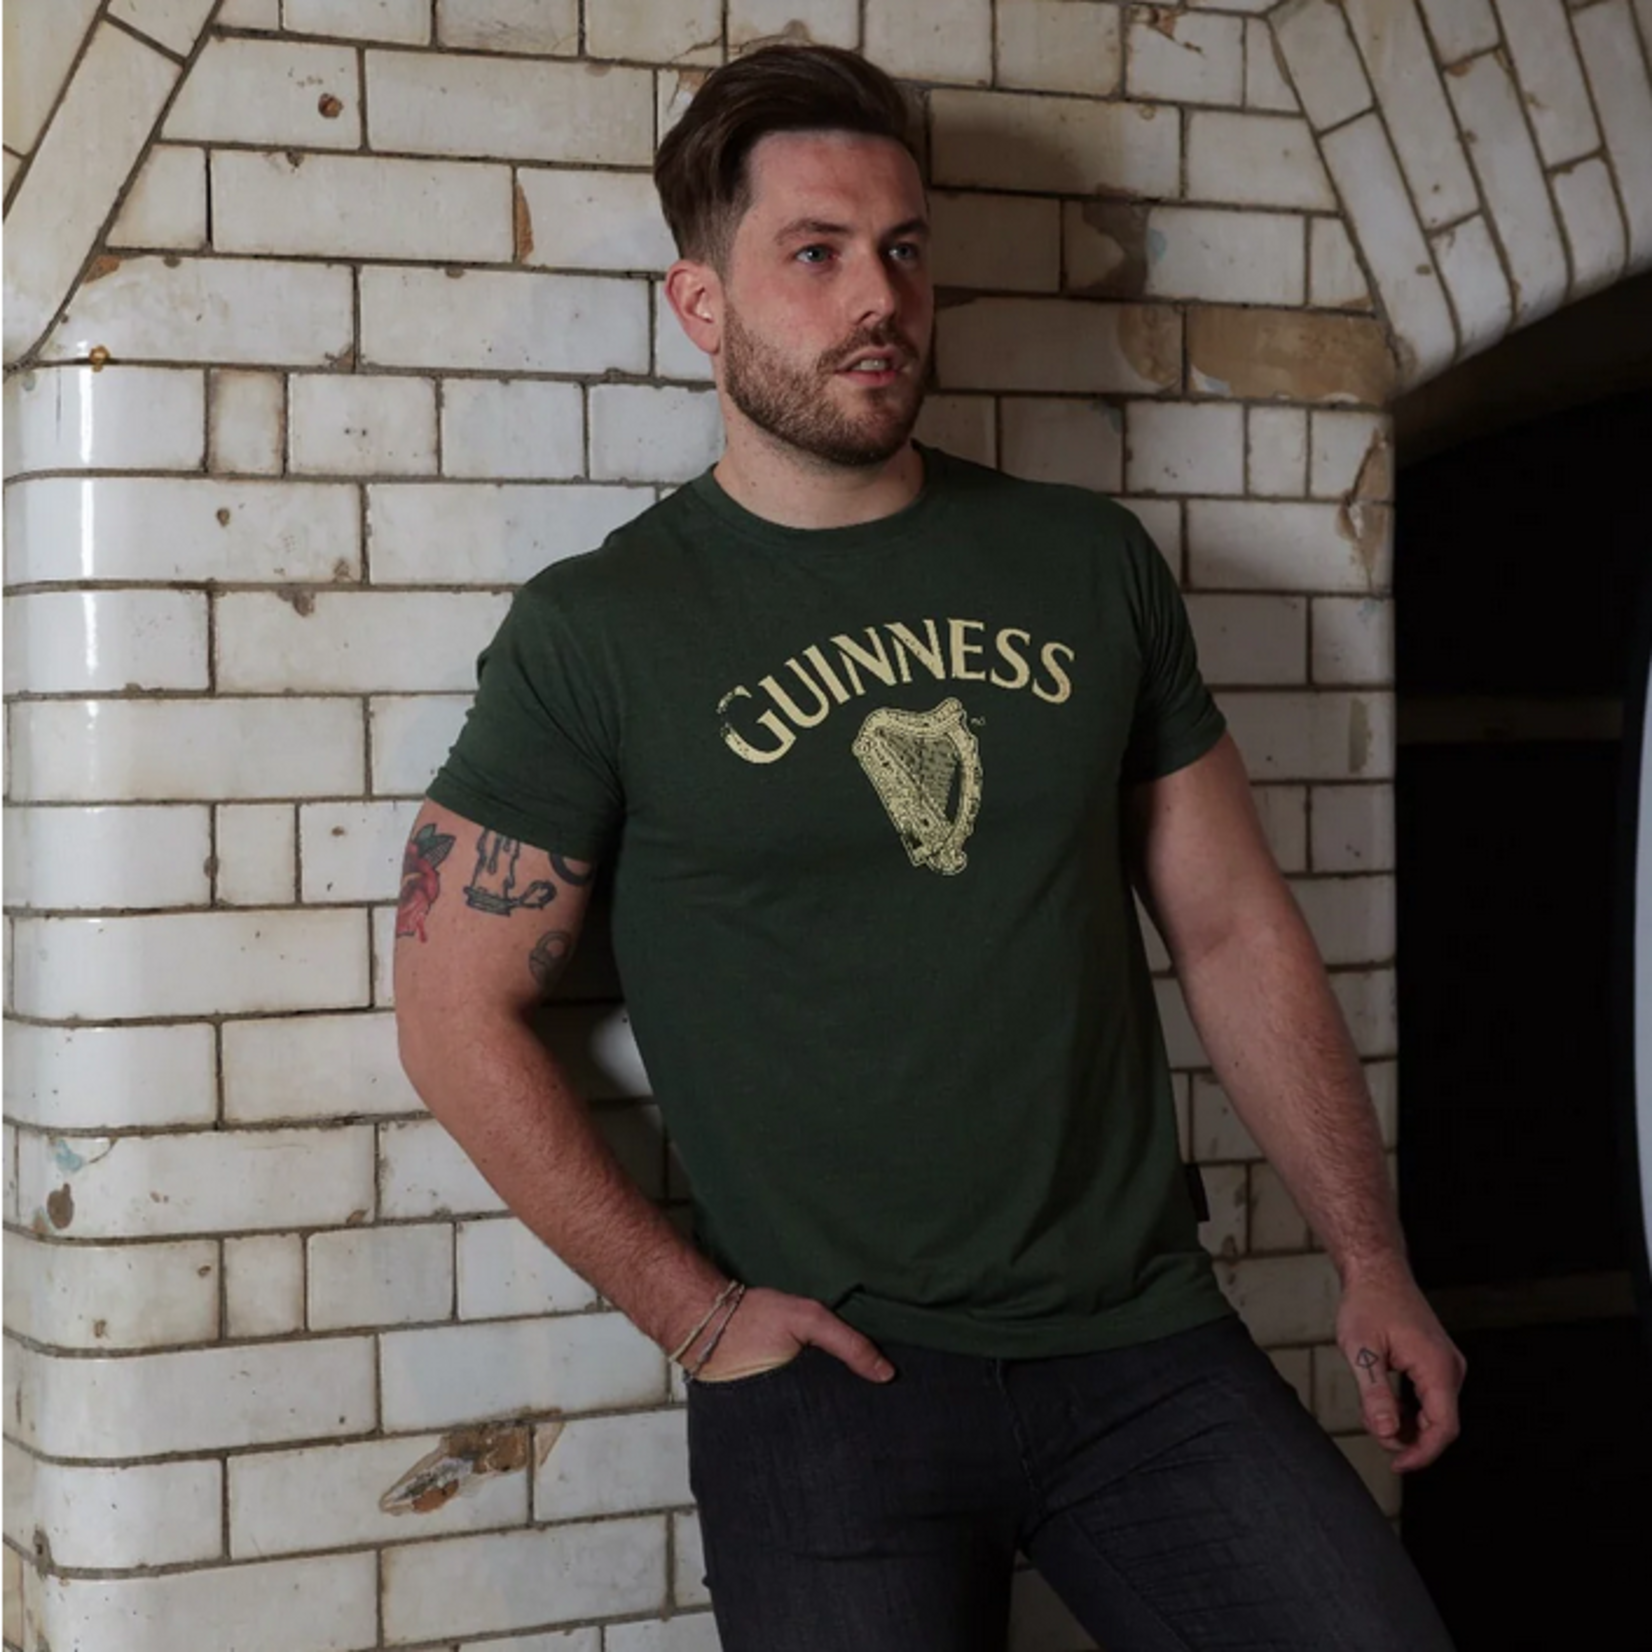 Ireland Harp Hockey Jersey Shirt